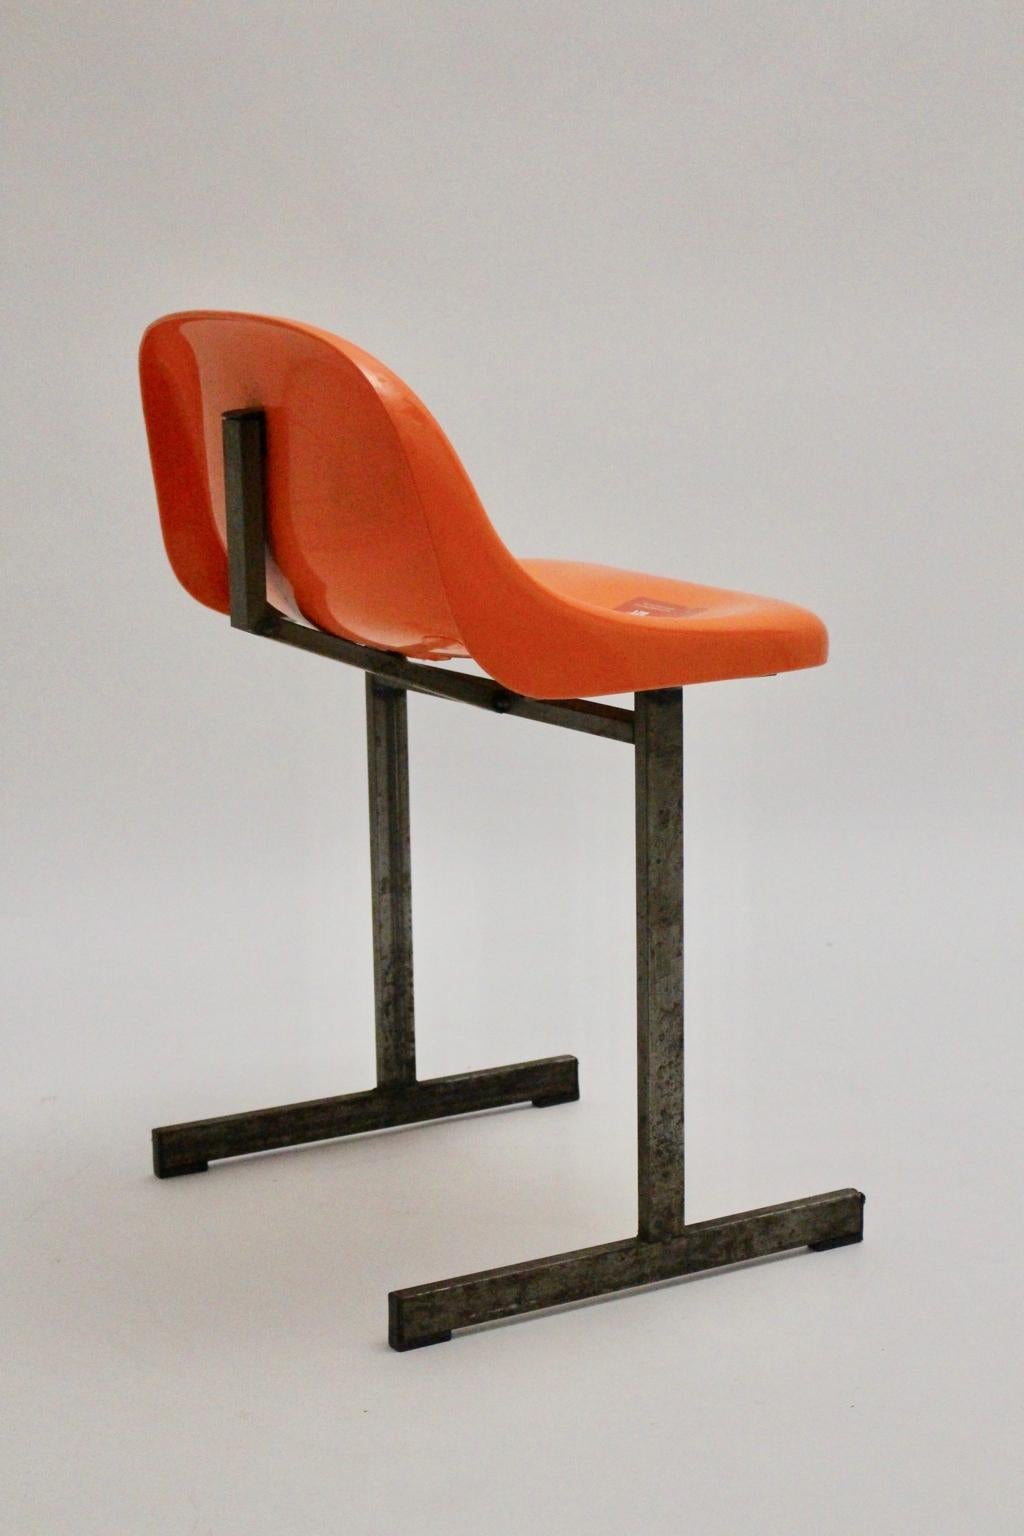 Space Age Vintage Orange Plastic Metal Chair 1970s For Sale 6